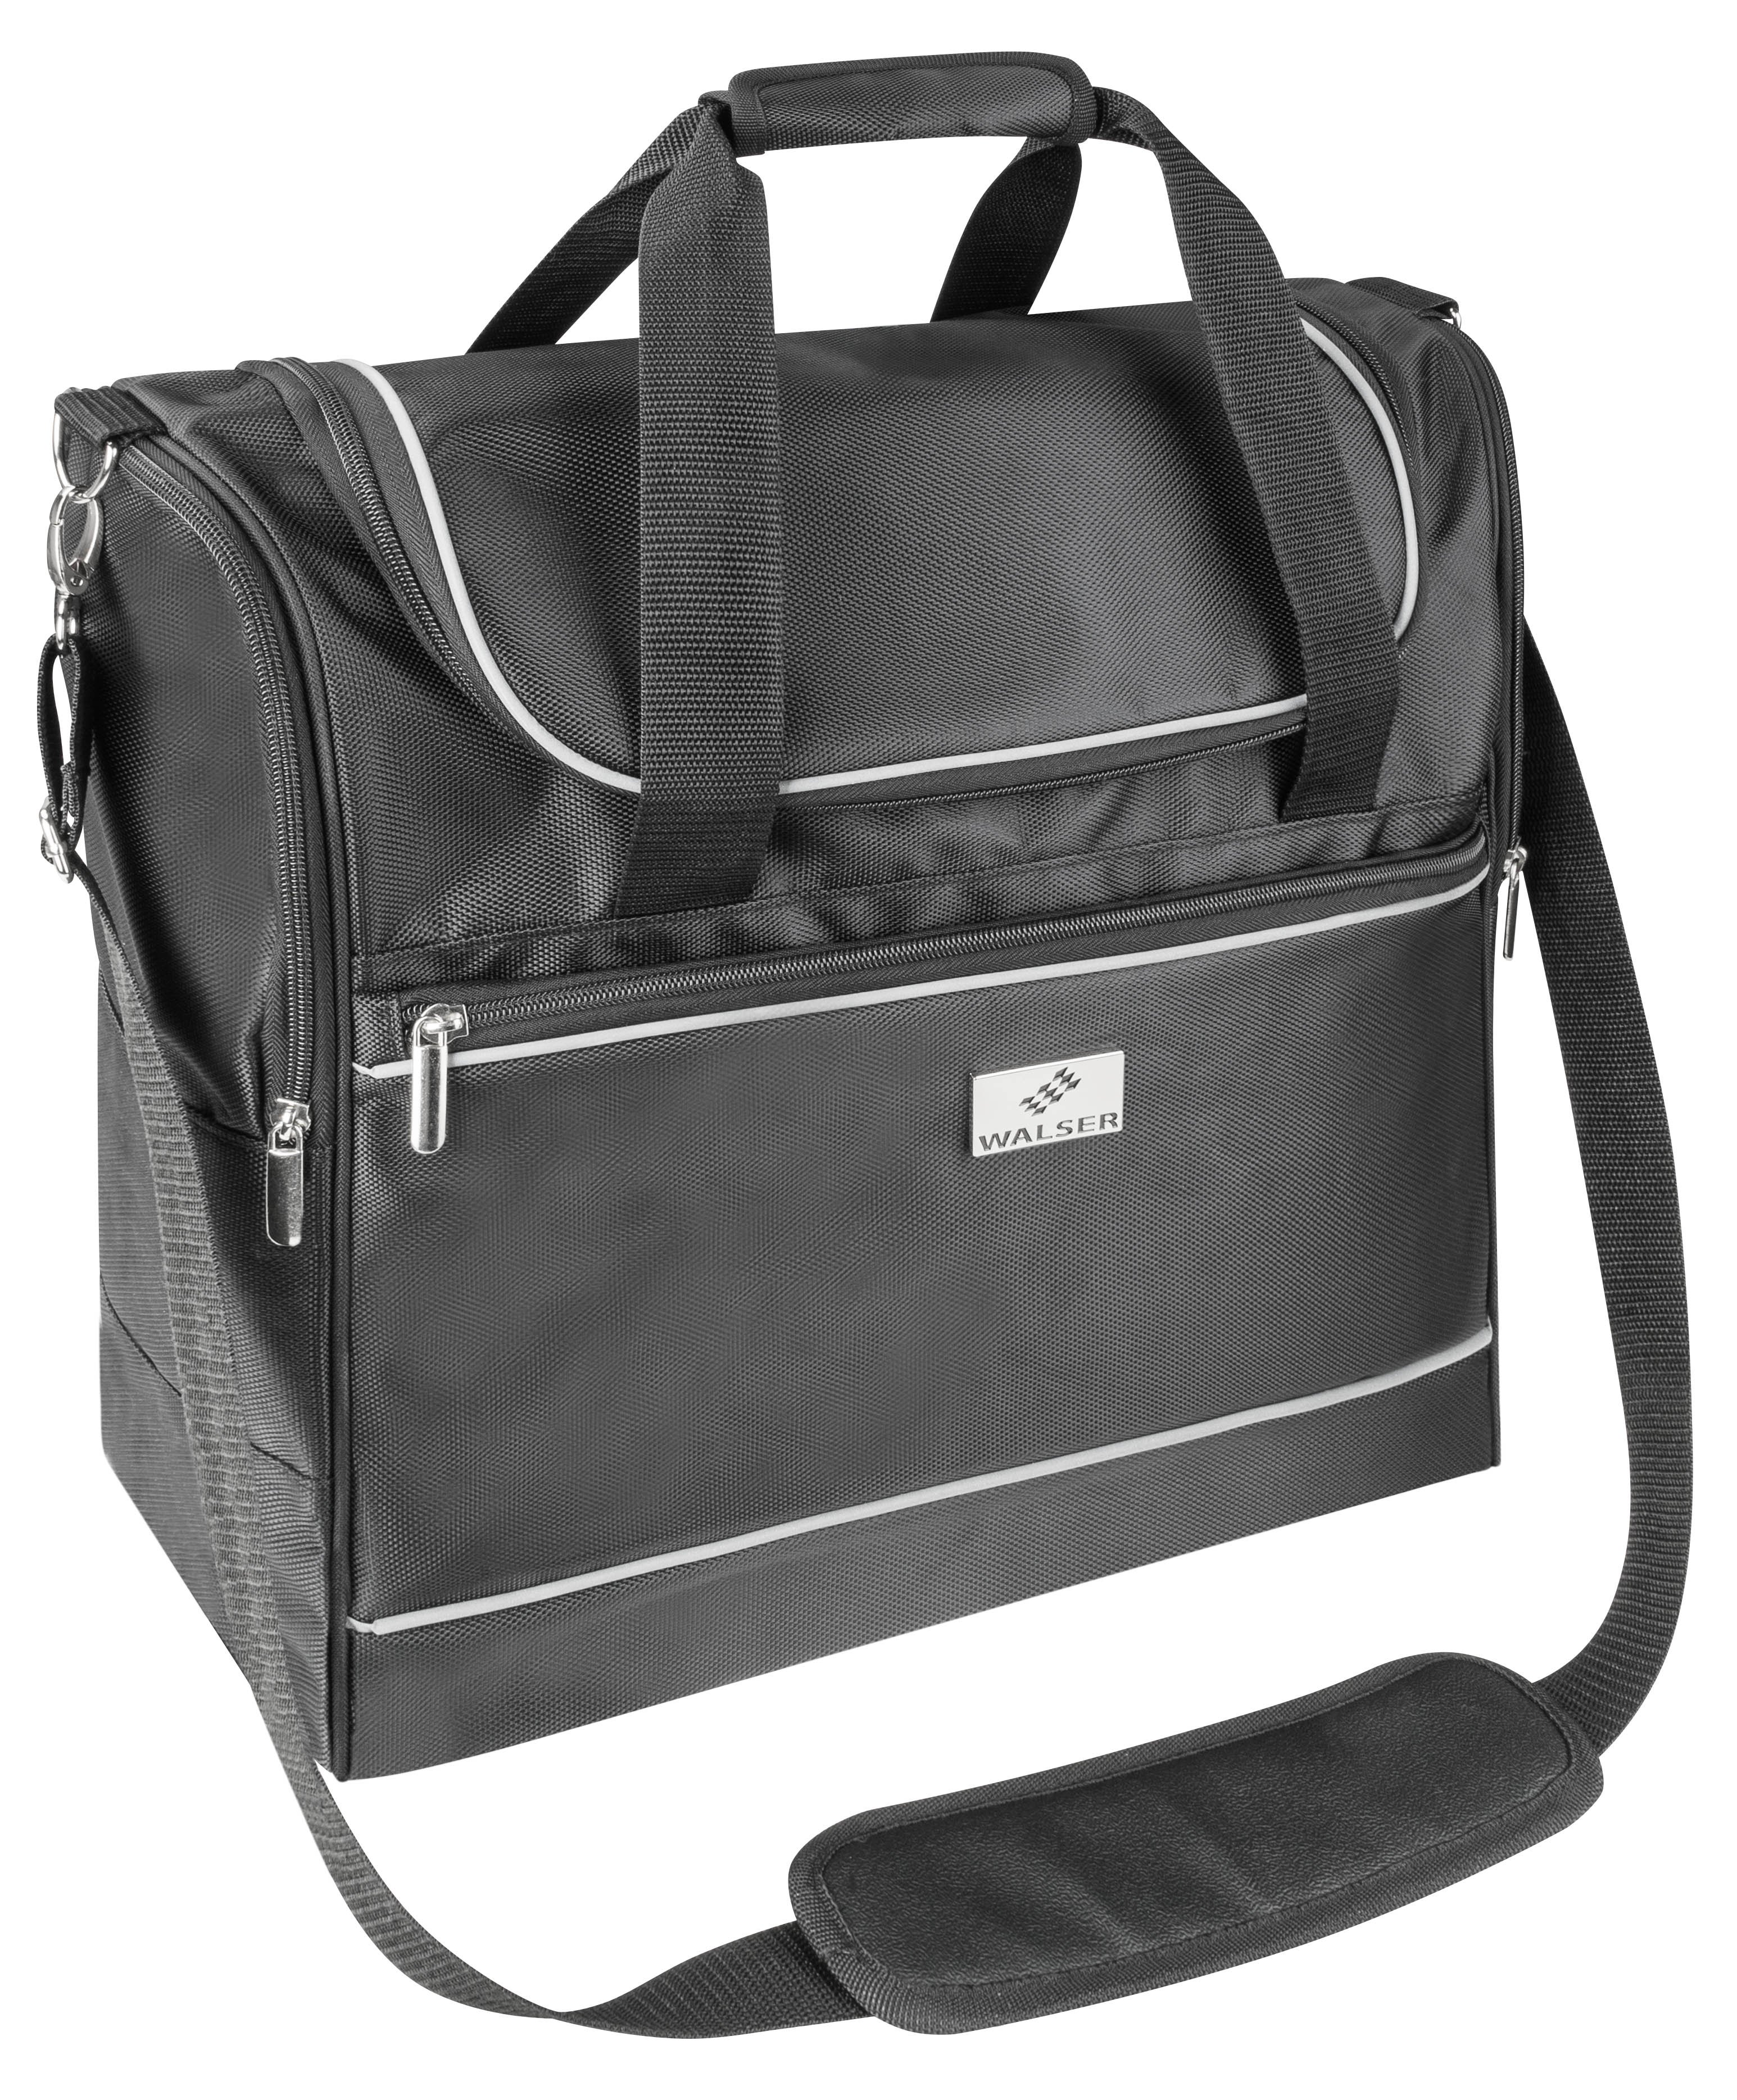 Carbags travel bag 55L - 55x20x40cm